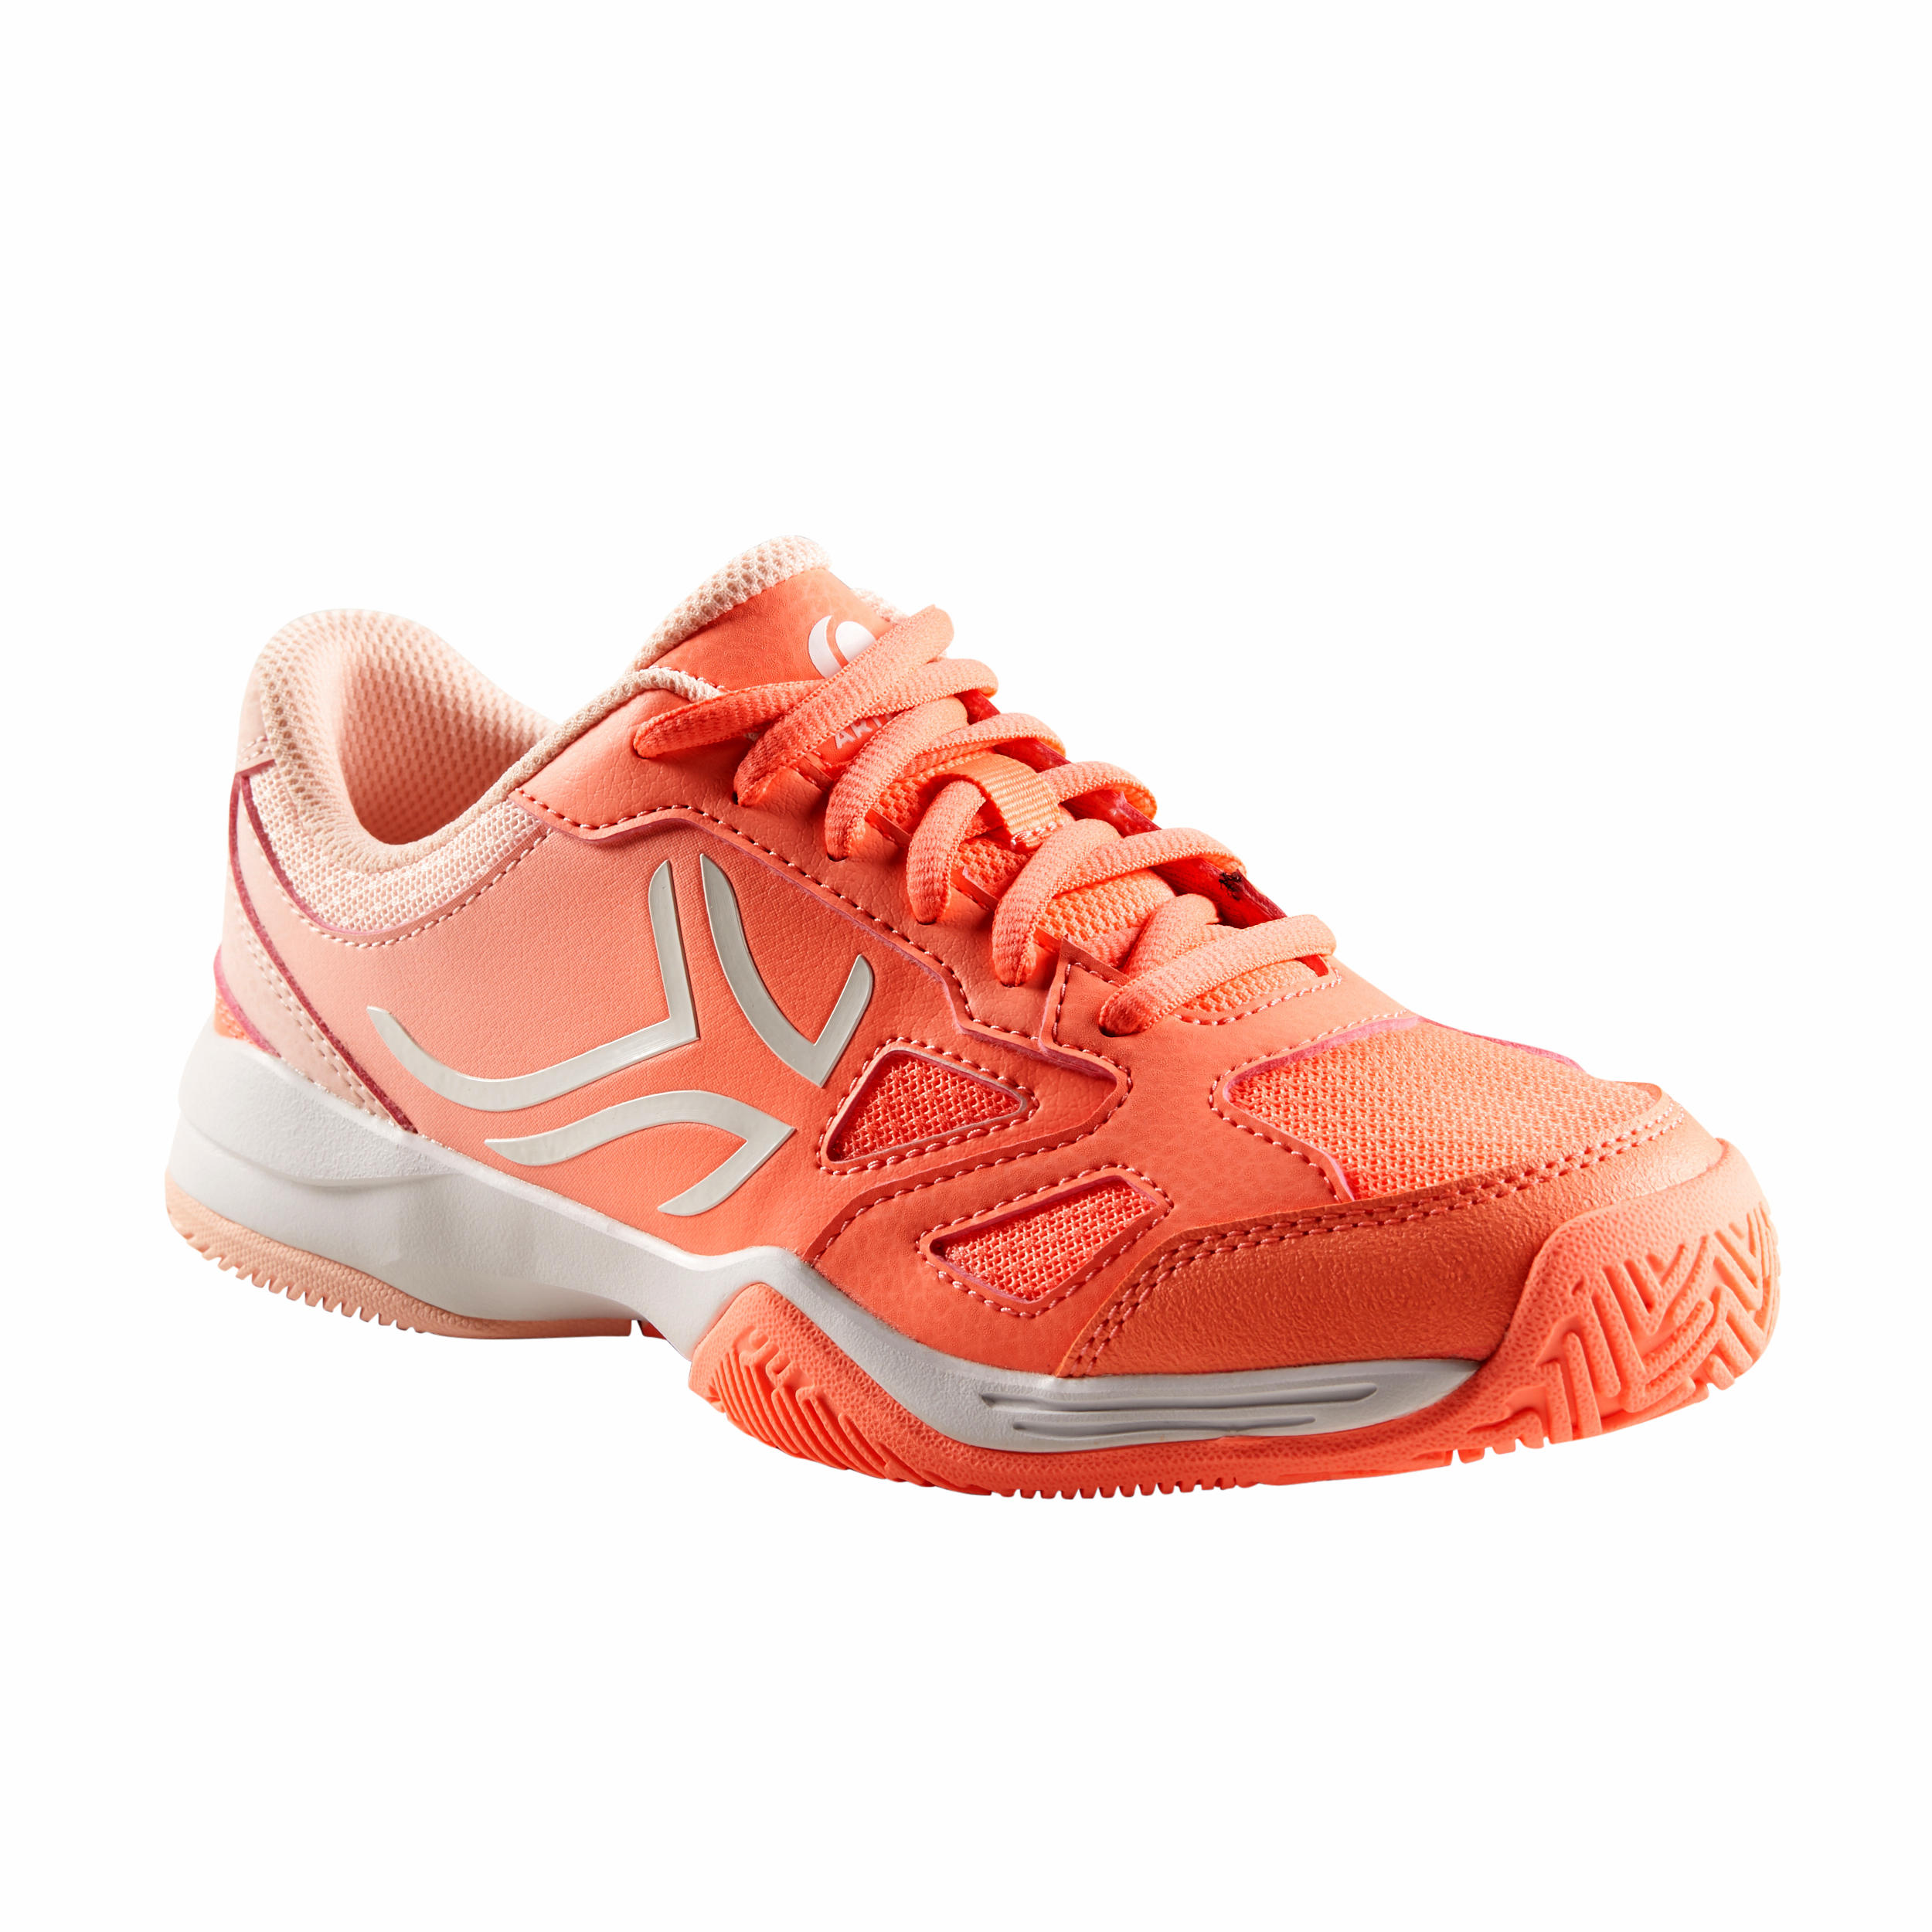 ARTENGO Kids' Tennis Shoes TS560 - Coral